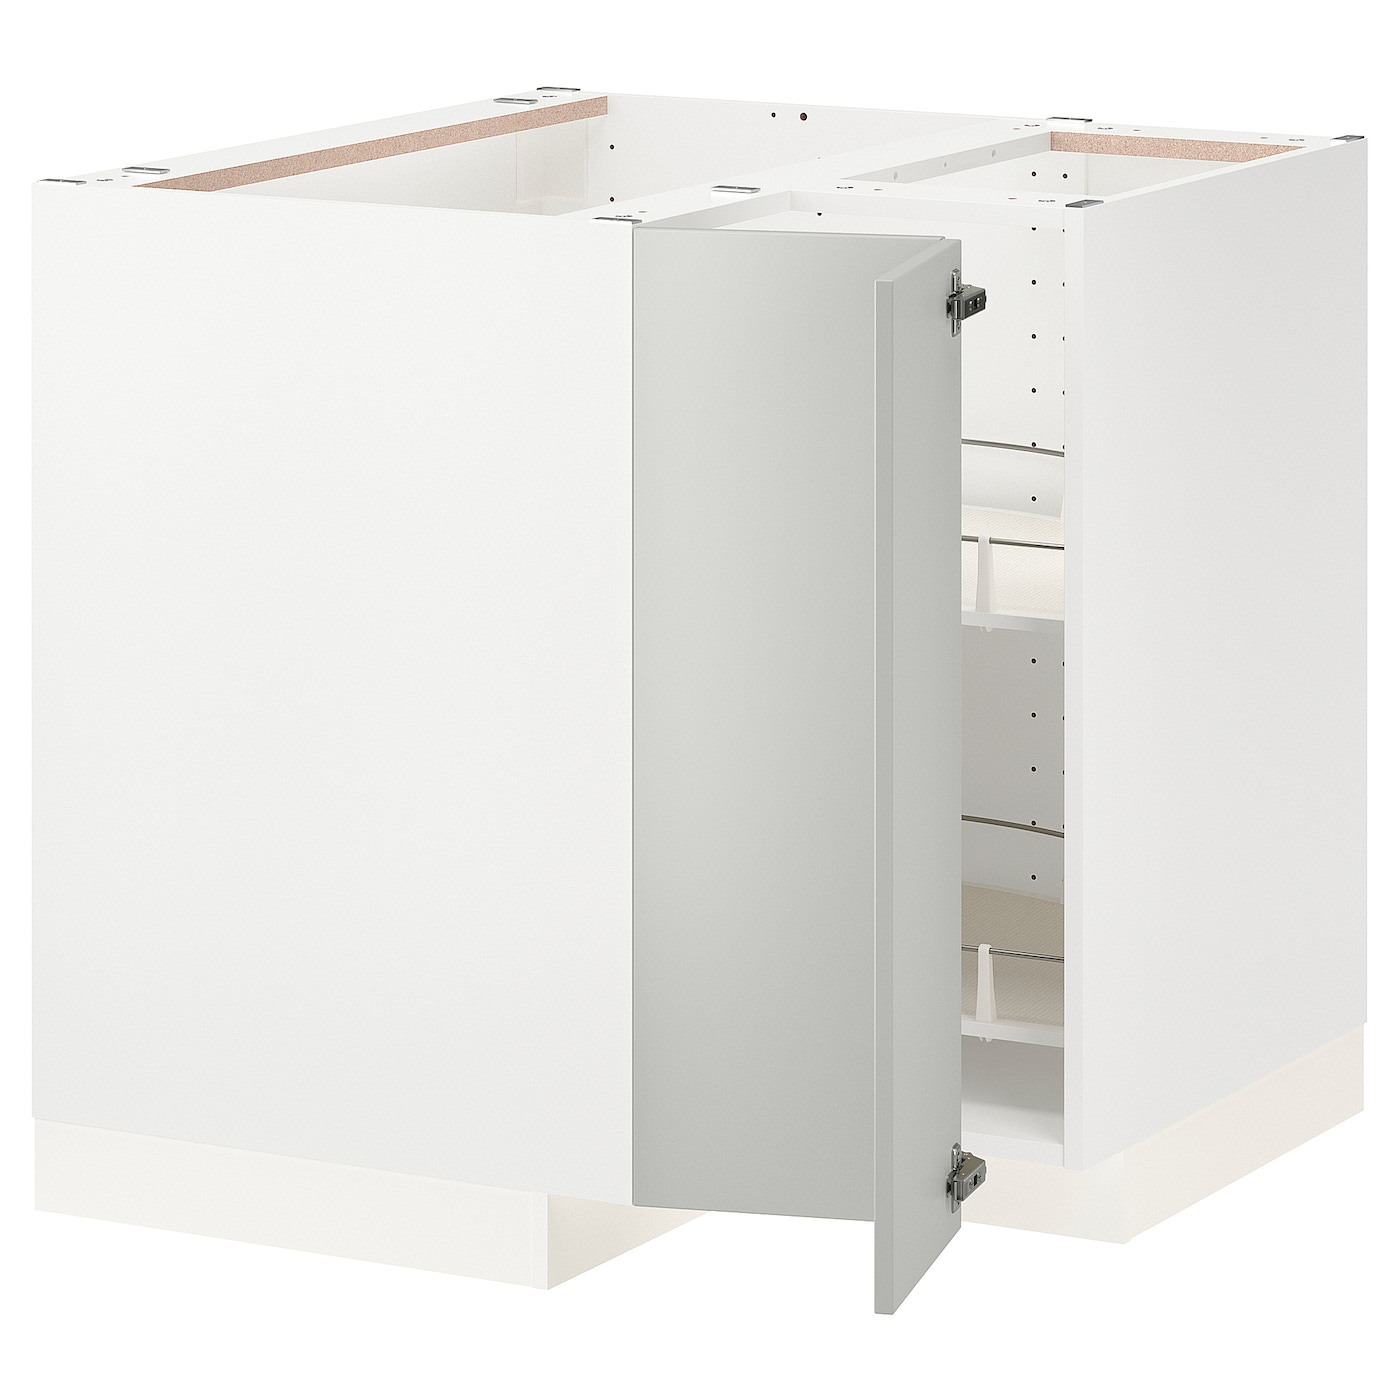 Напольный шкаф - METOD IKEA/ МЕТОД ИКЕА,  88х88 см, белый/светло-серый